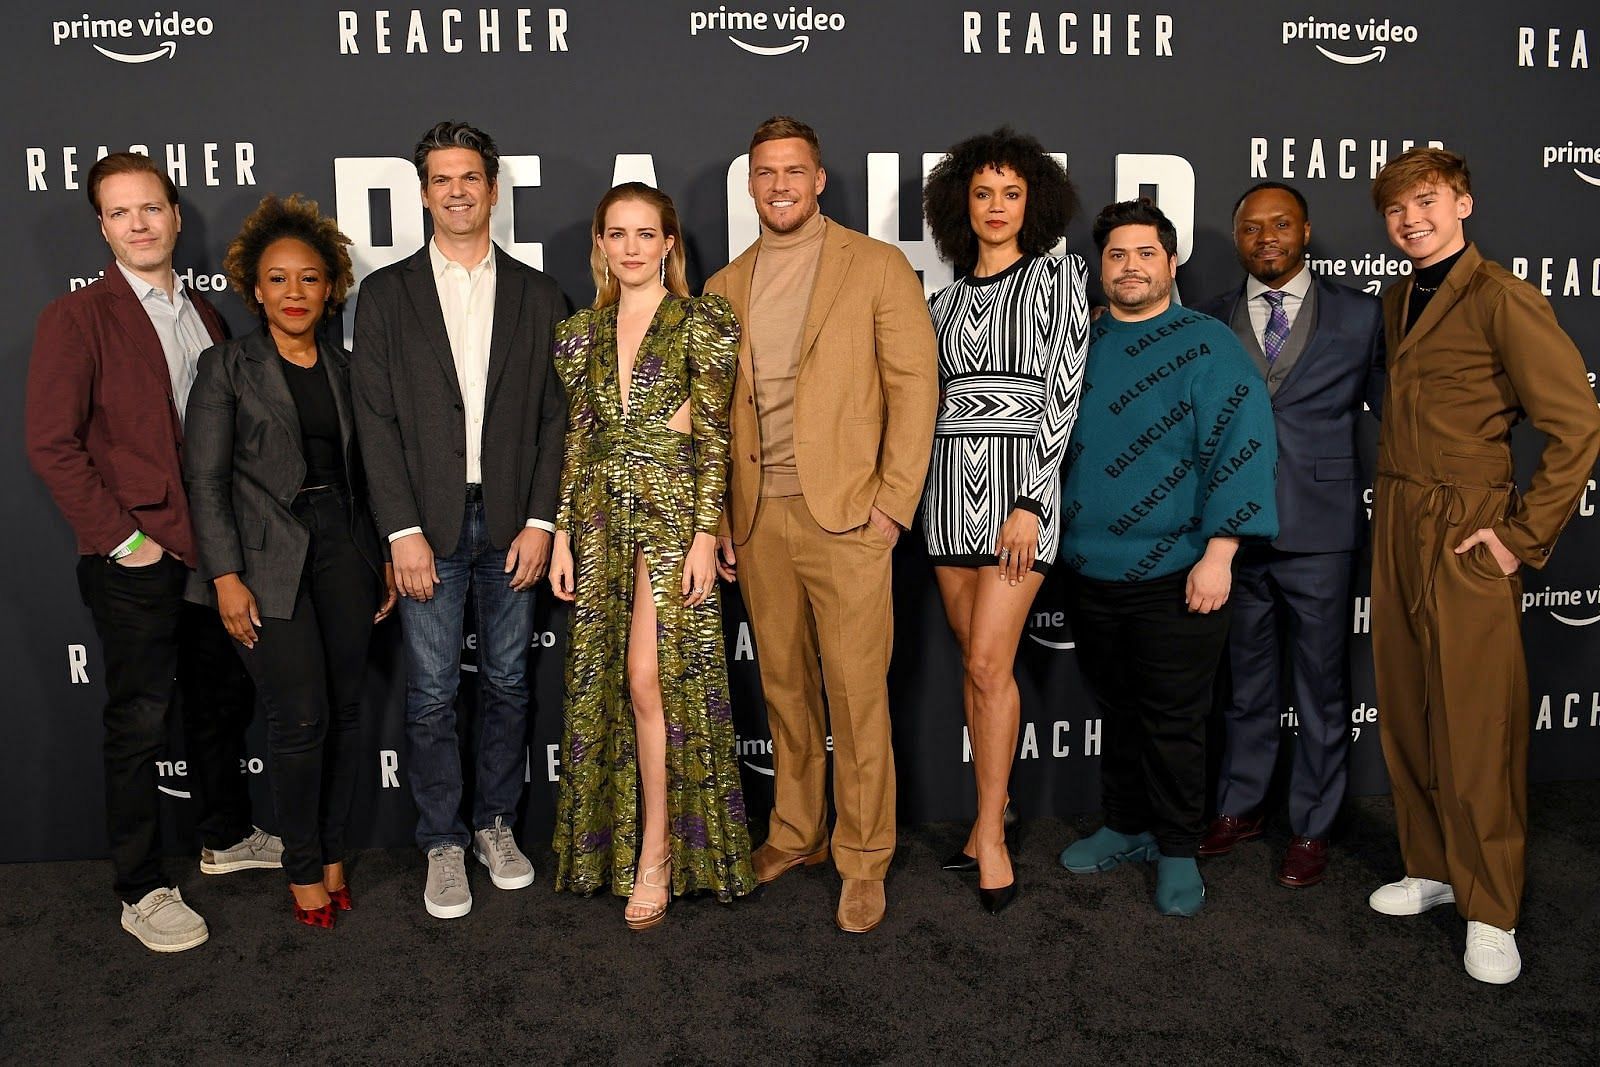 Cast of Reacher Season 1